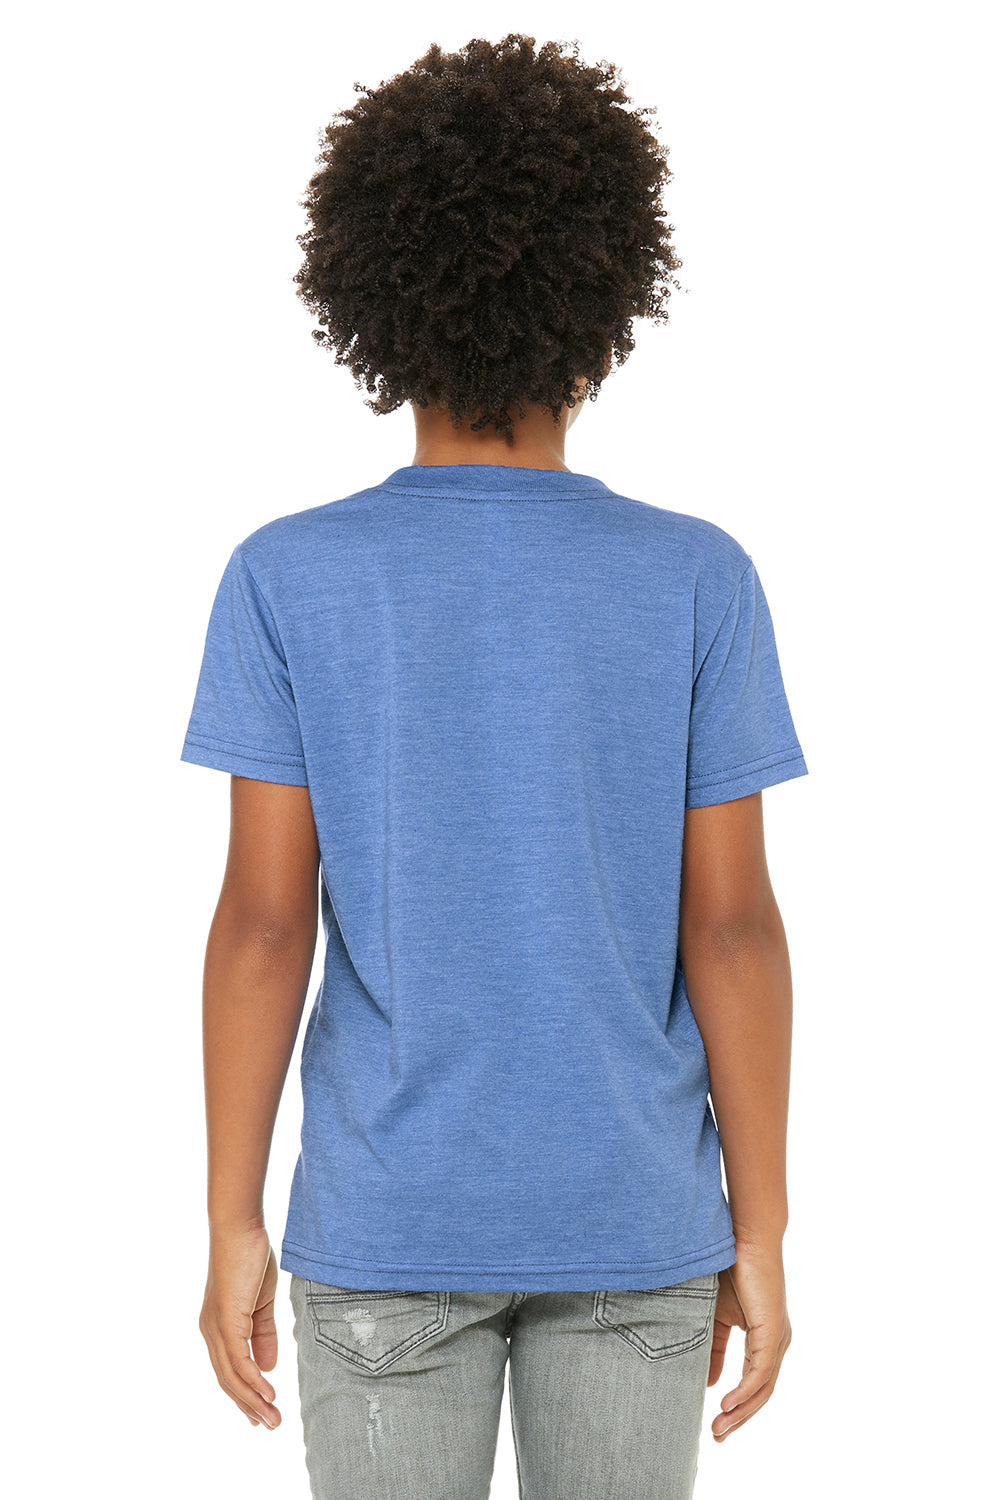 Bella + Canvas 3001Y Youth Jersey Short Sleeve Crewneck T-Shirt Heather Columbia Blue Model Back